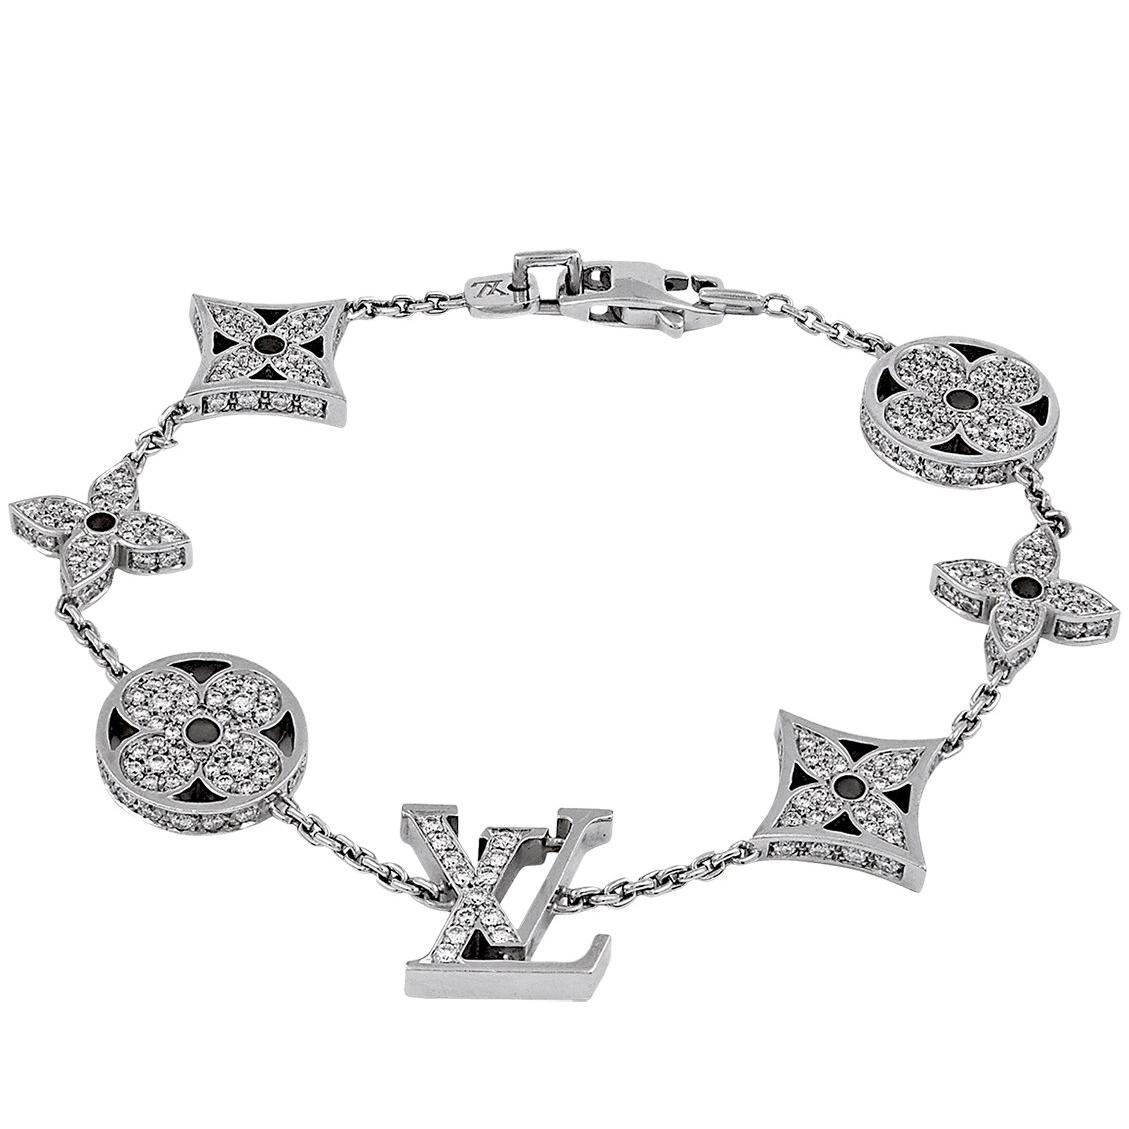 Louis Vuitton Diamond Monogram Bracelet